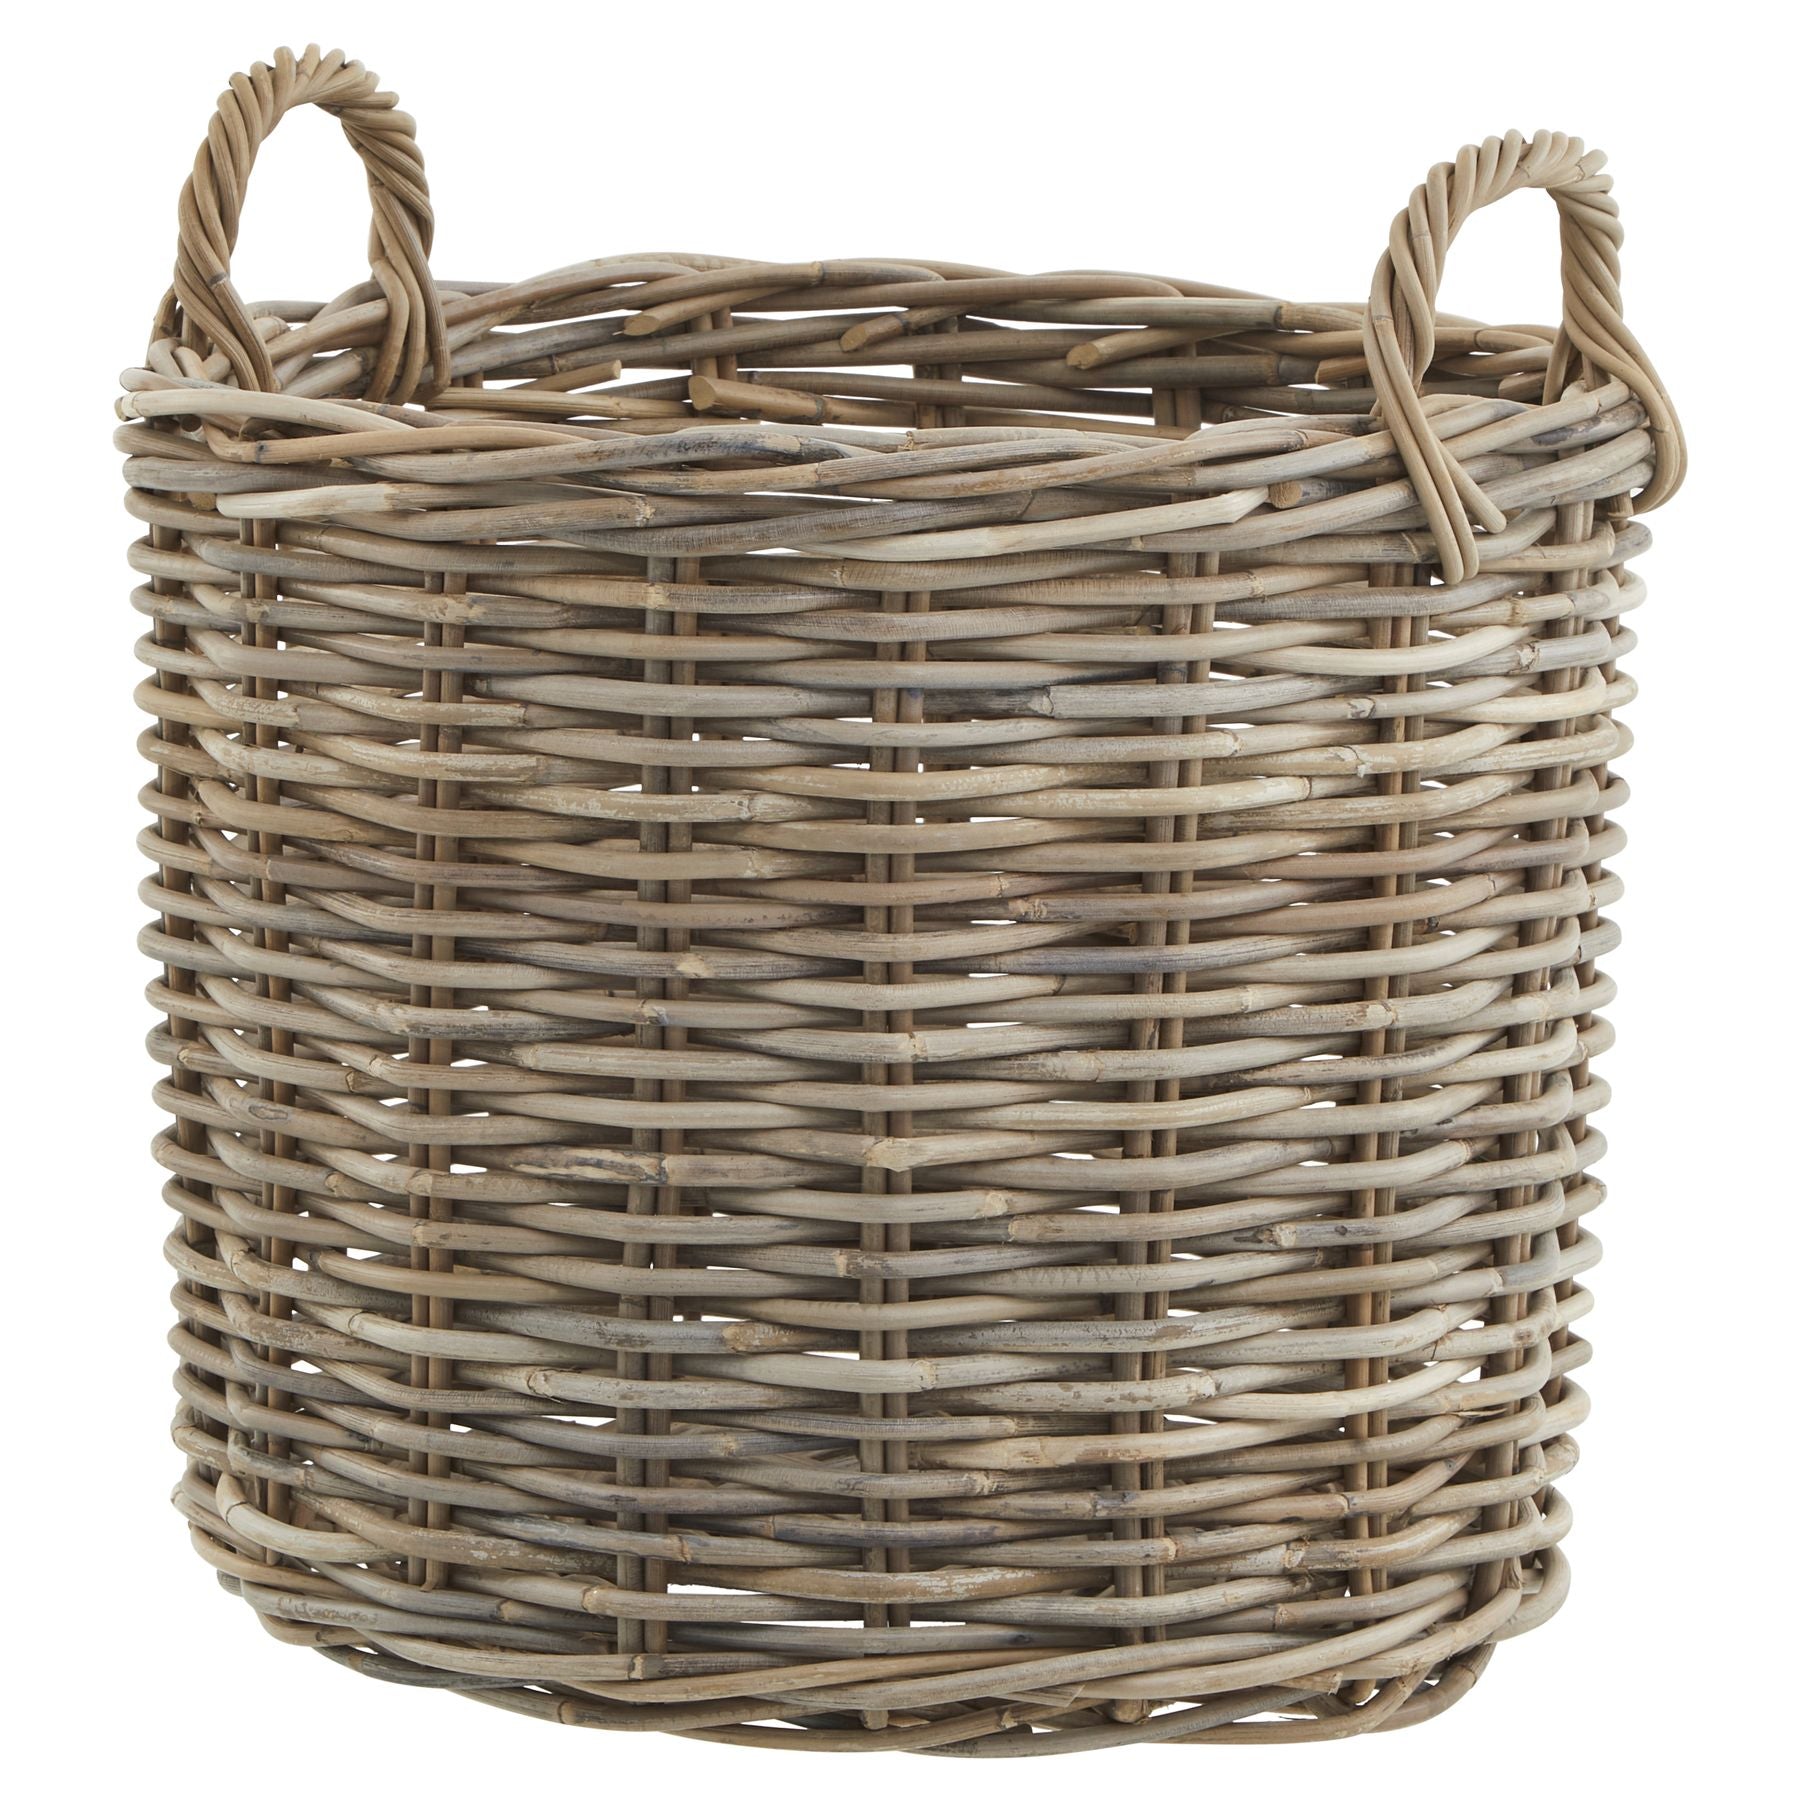 Set of 3 Kubu Rattan Round Storage Baskets